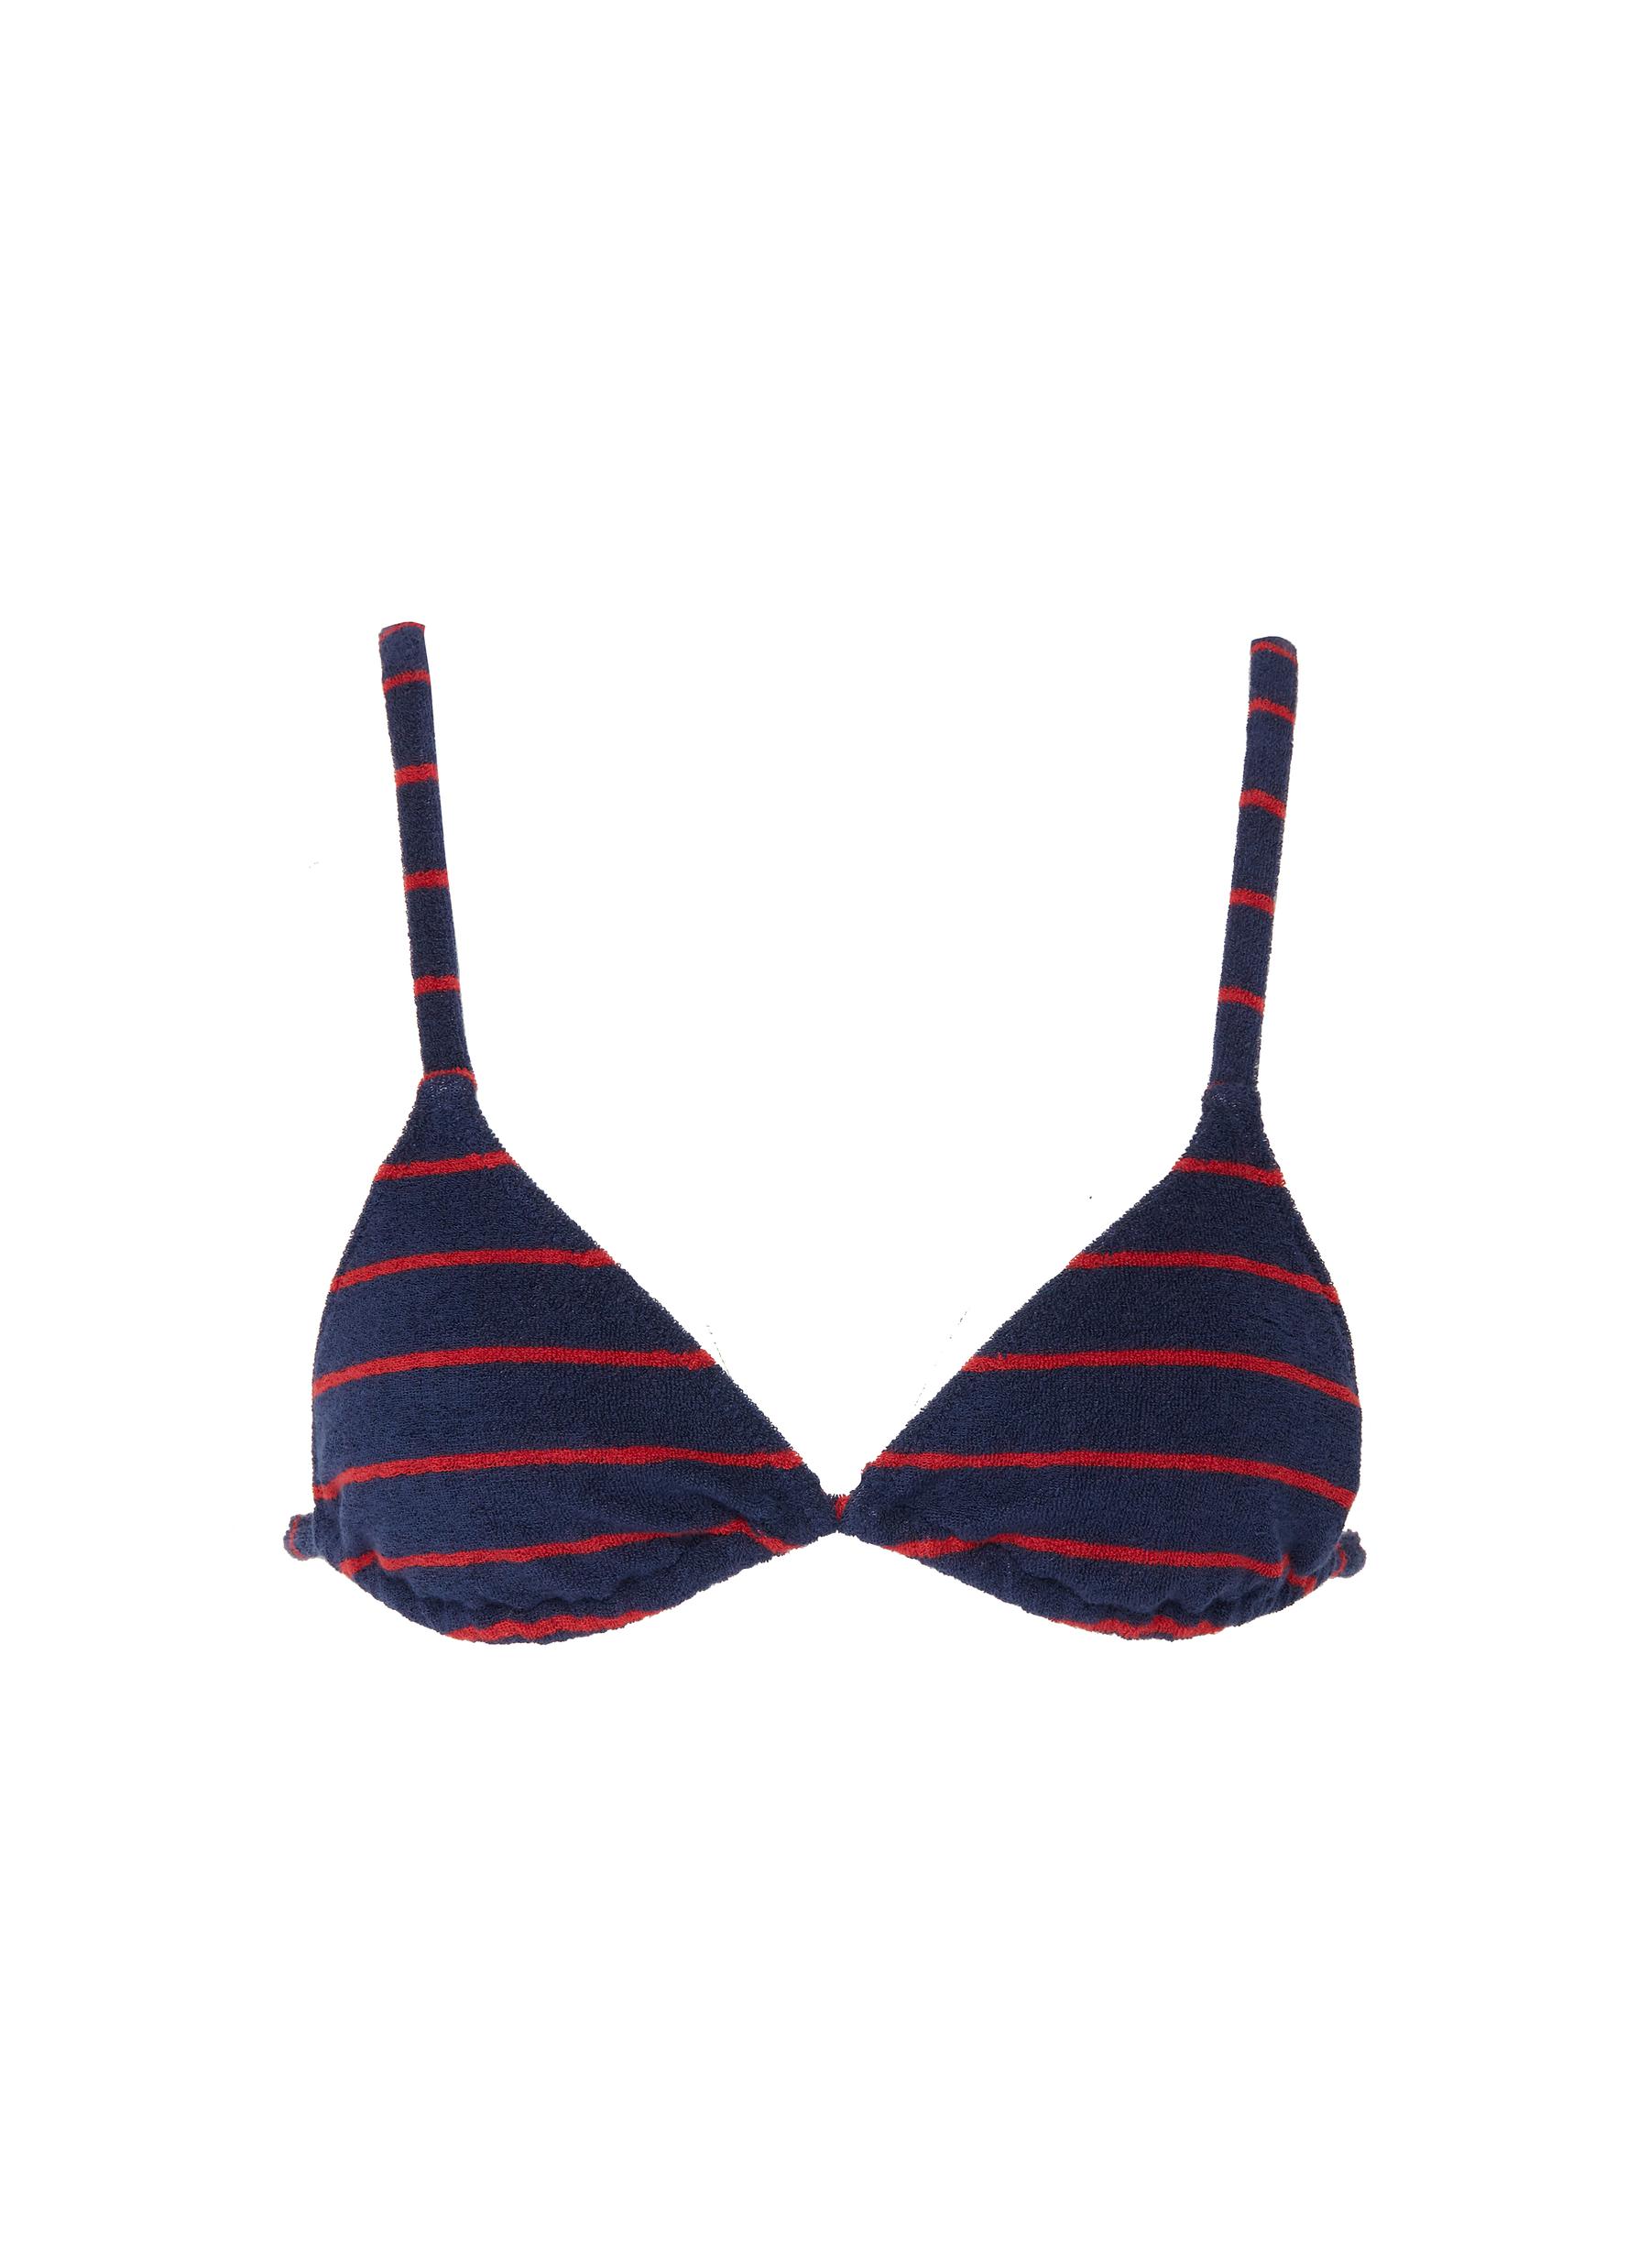 Nantucket stripe triangle bikini top by Solid & Striped